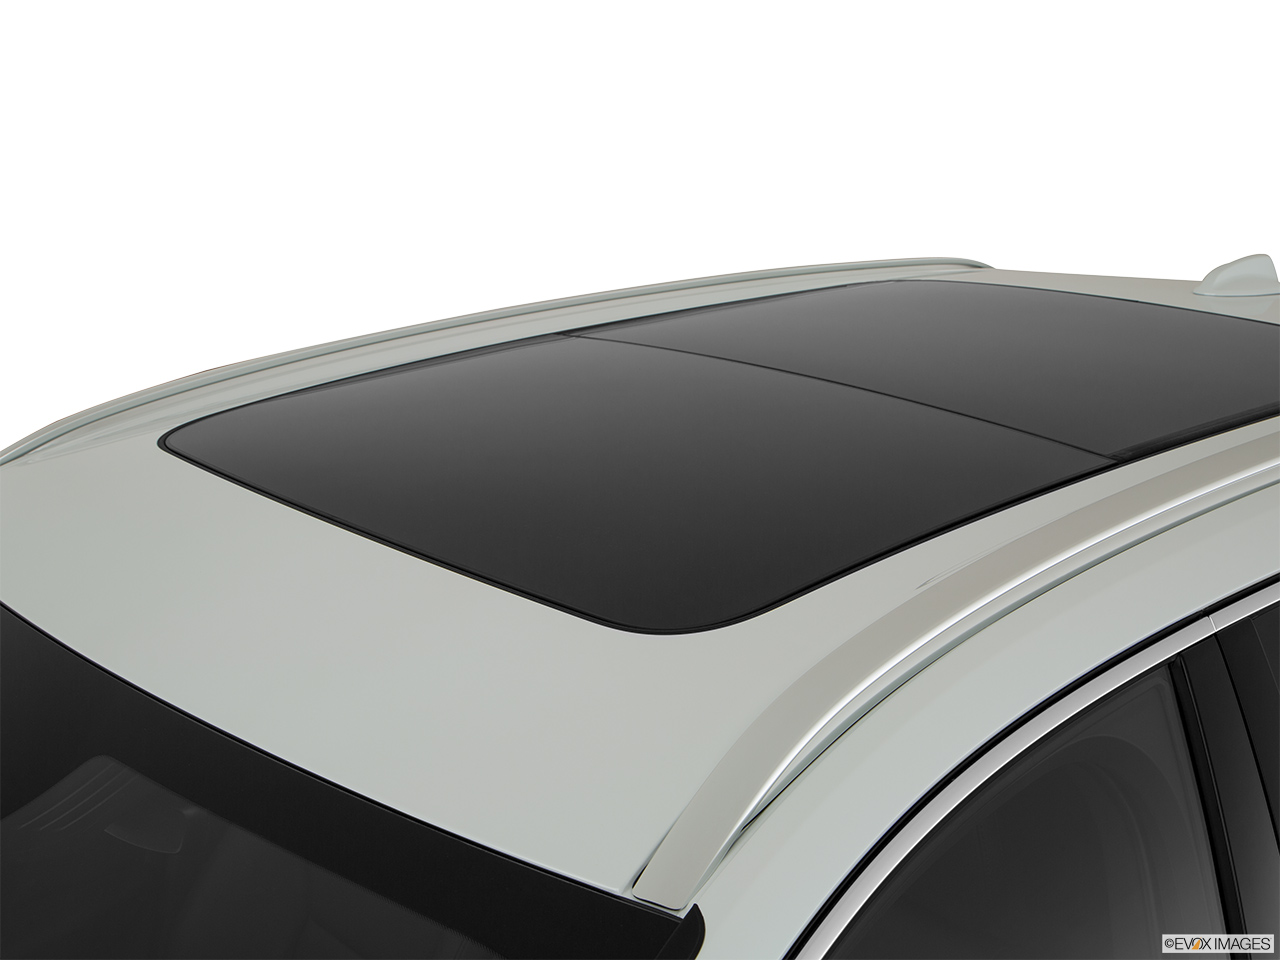 2019 Volvo XC60 T8 Inscription eAWD Plug-in Hybrid Sunroof/moonroof. 